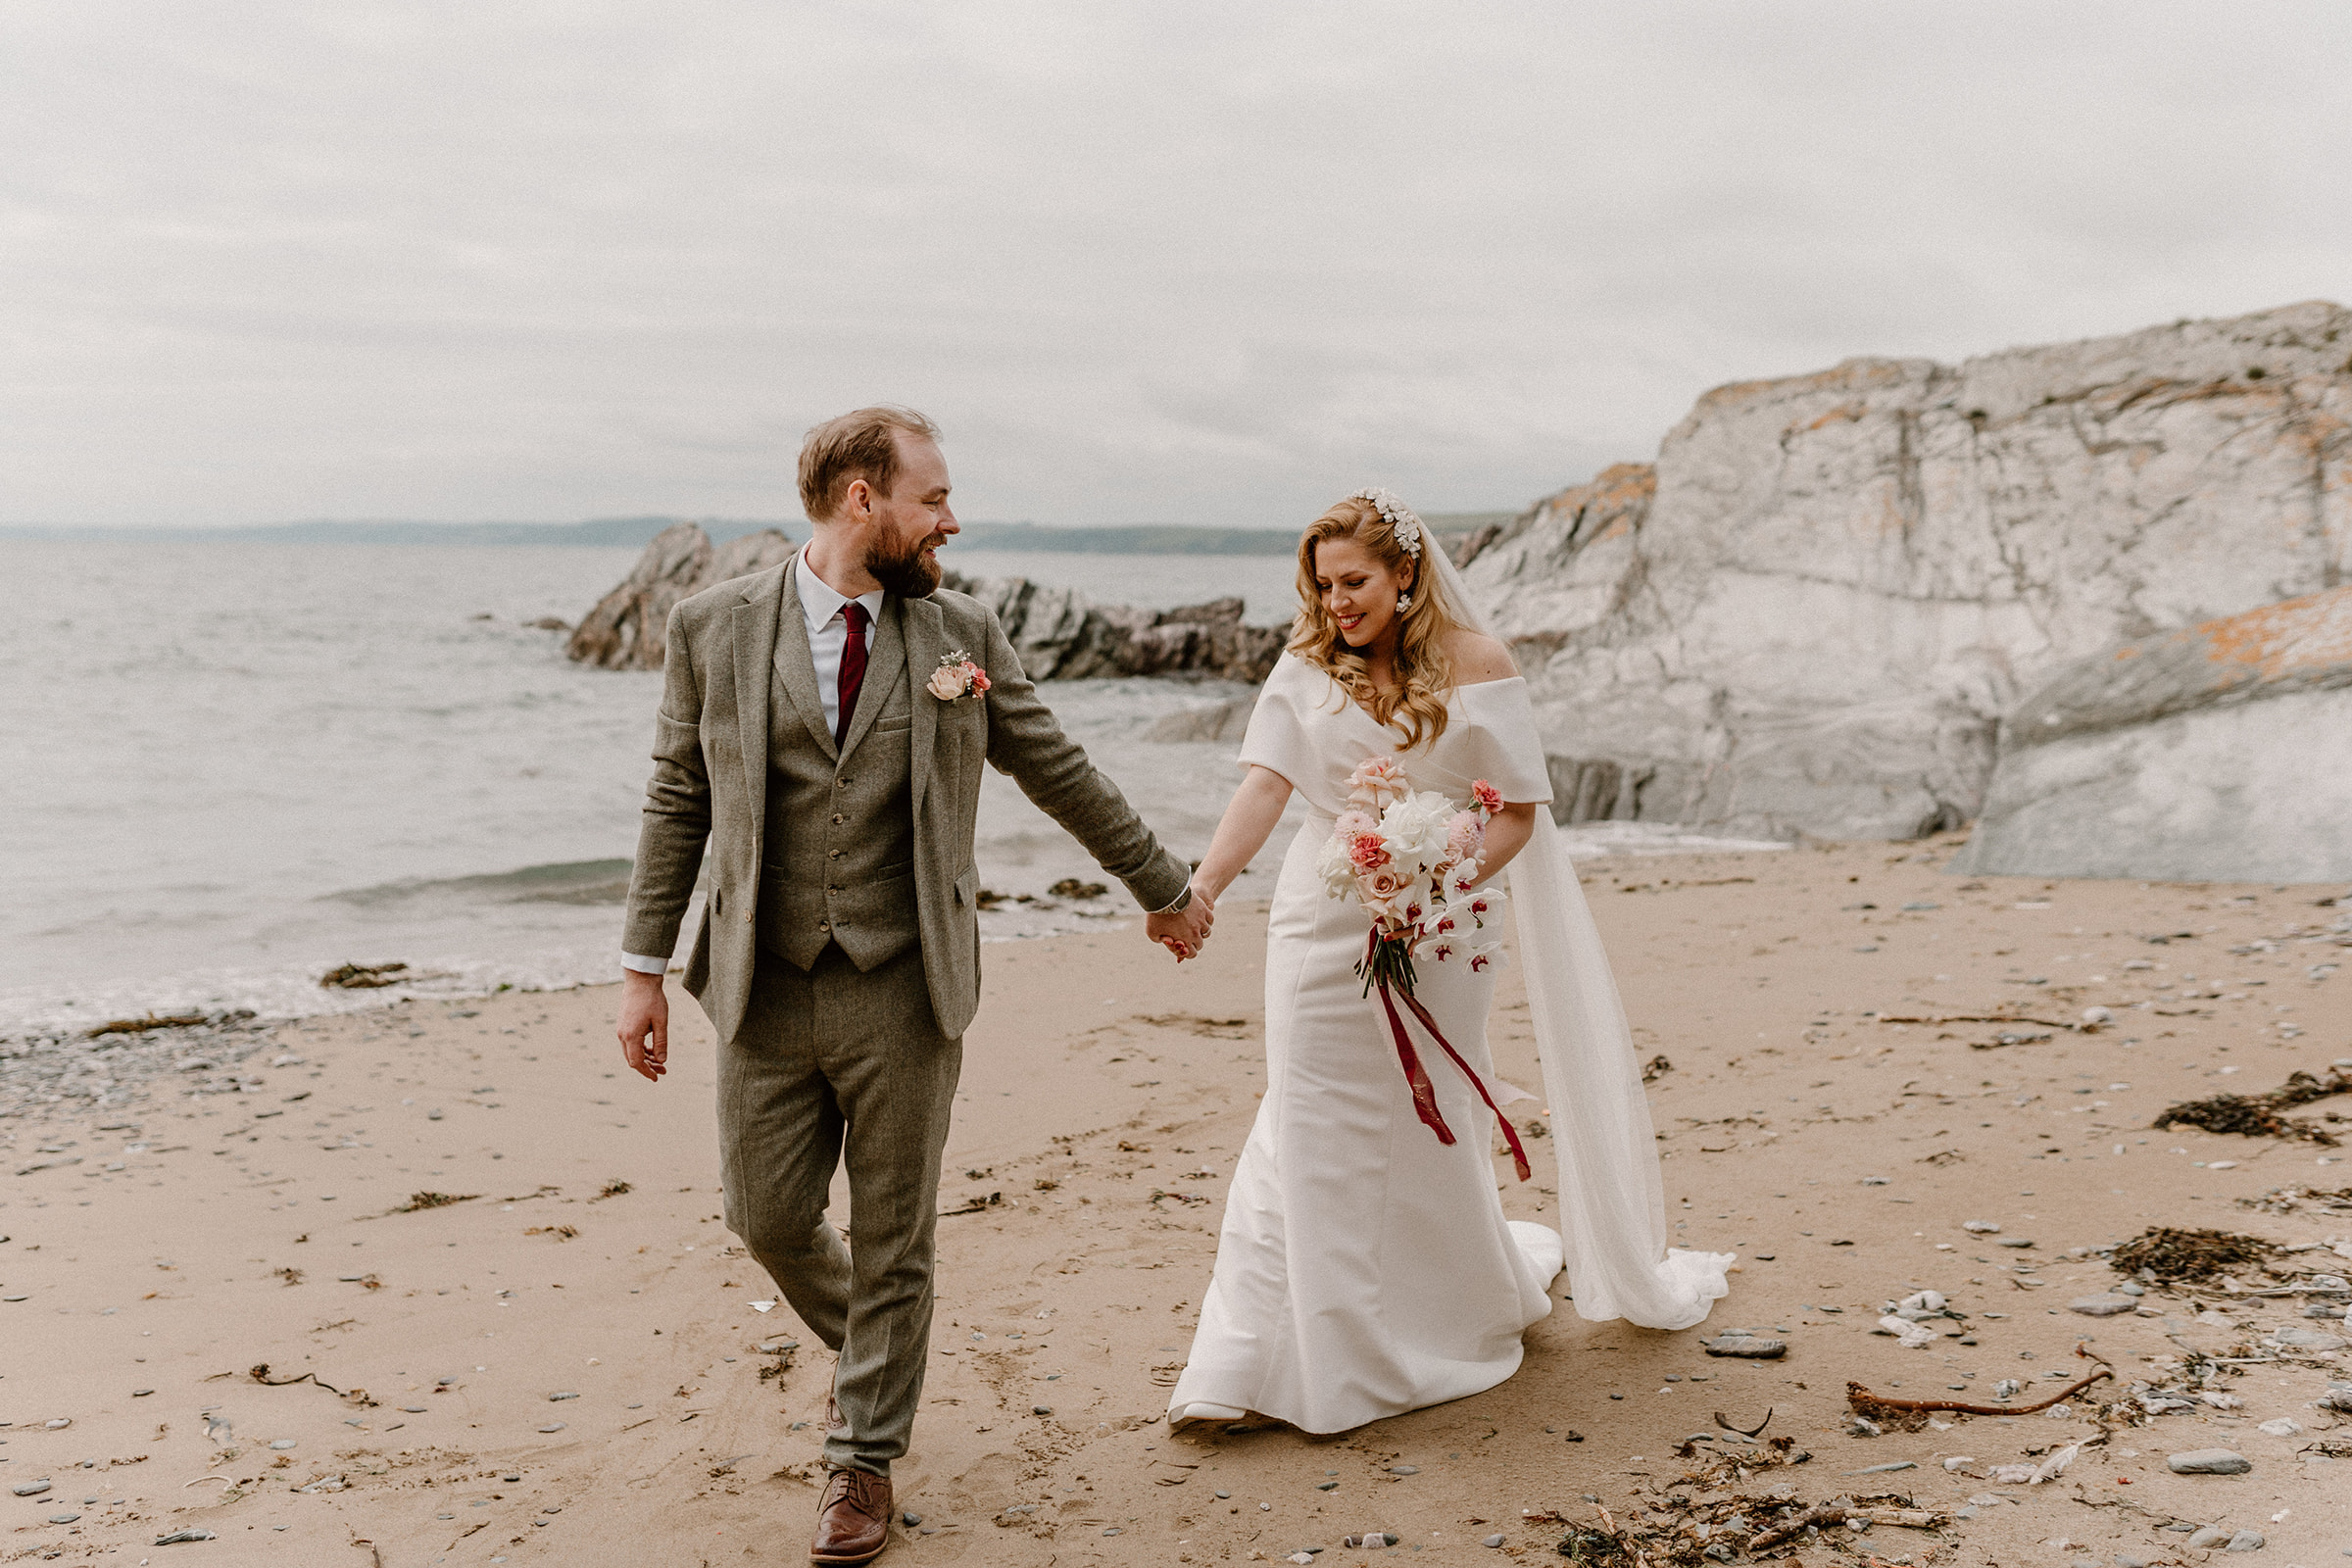 Bride and Groom walk hand in hand on sandy beach.